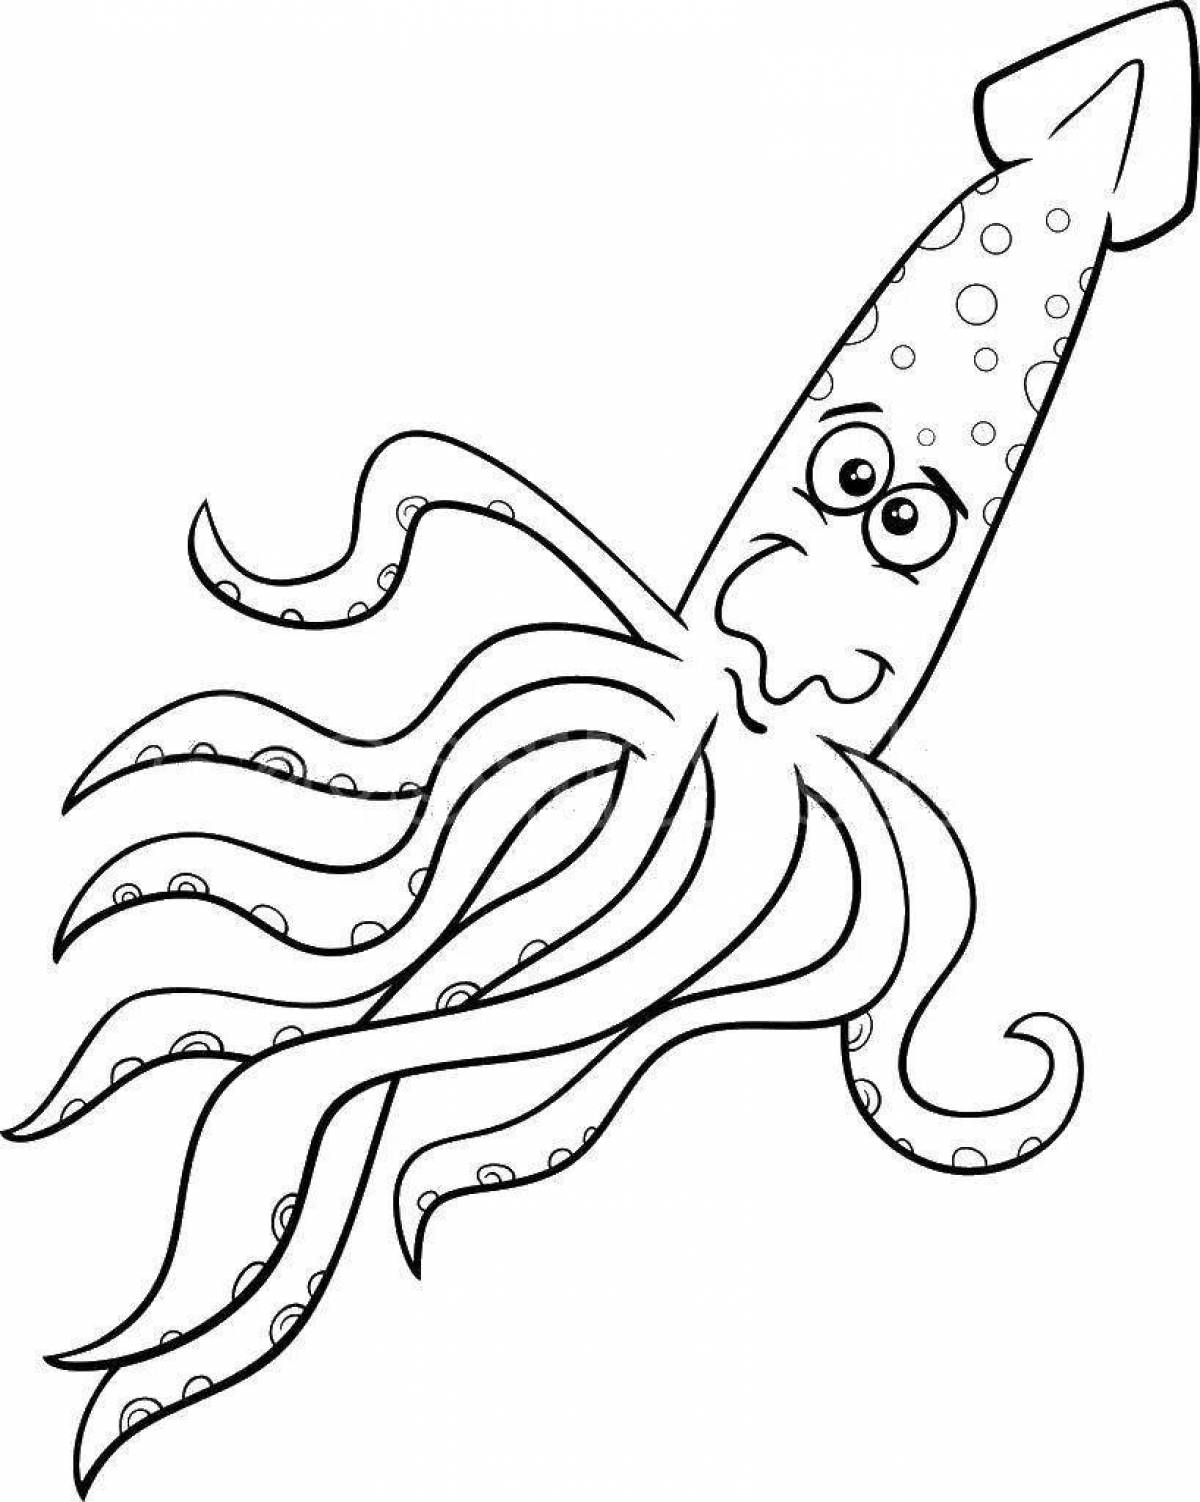 Squid for children #3